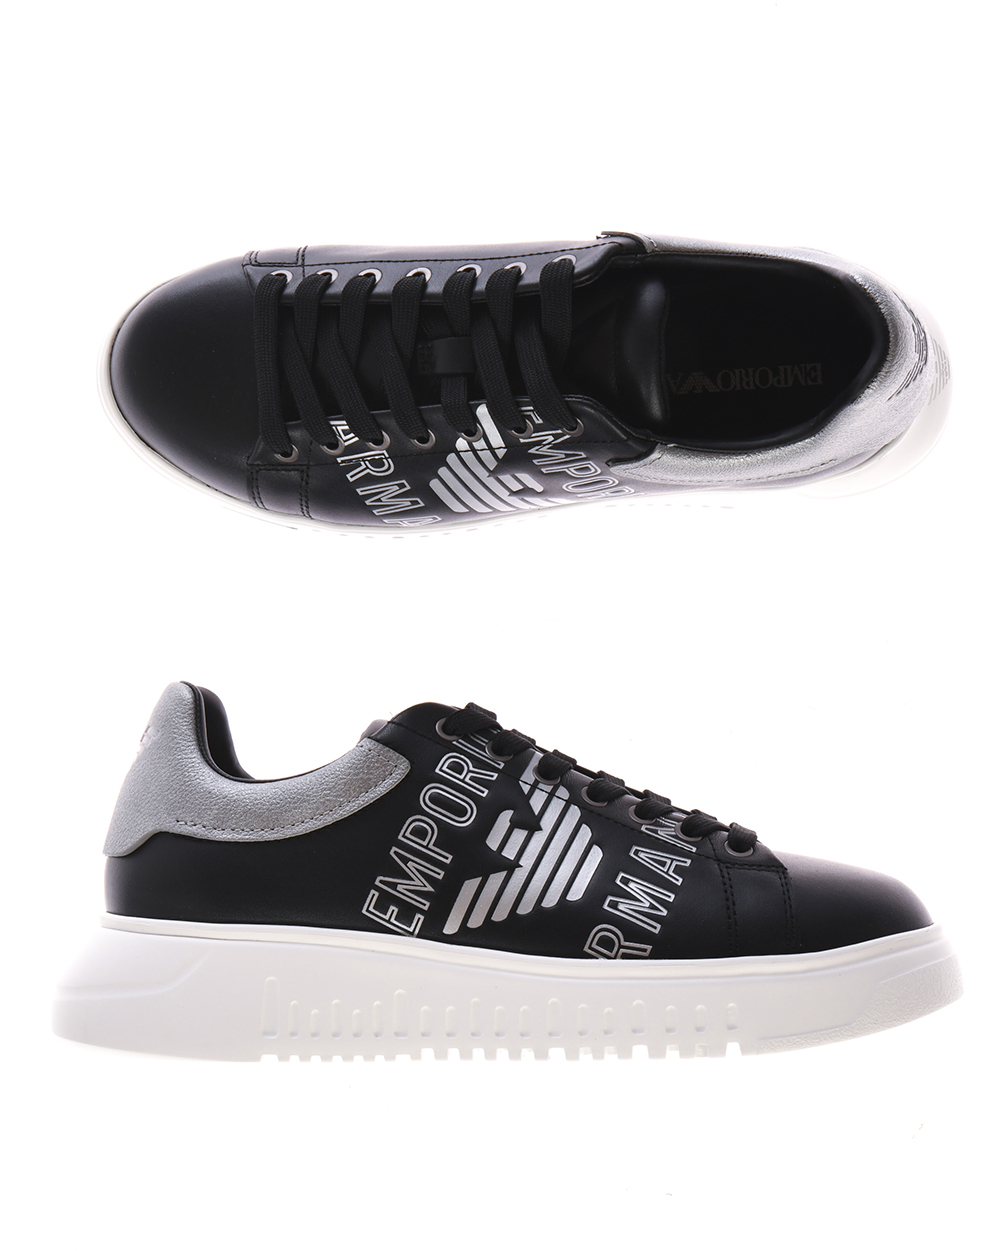 Emporio Armani Shoes Sneaker Leather Man Black X4X264 XM041 A114 Sz 41 MAKEOFFER